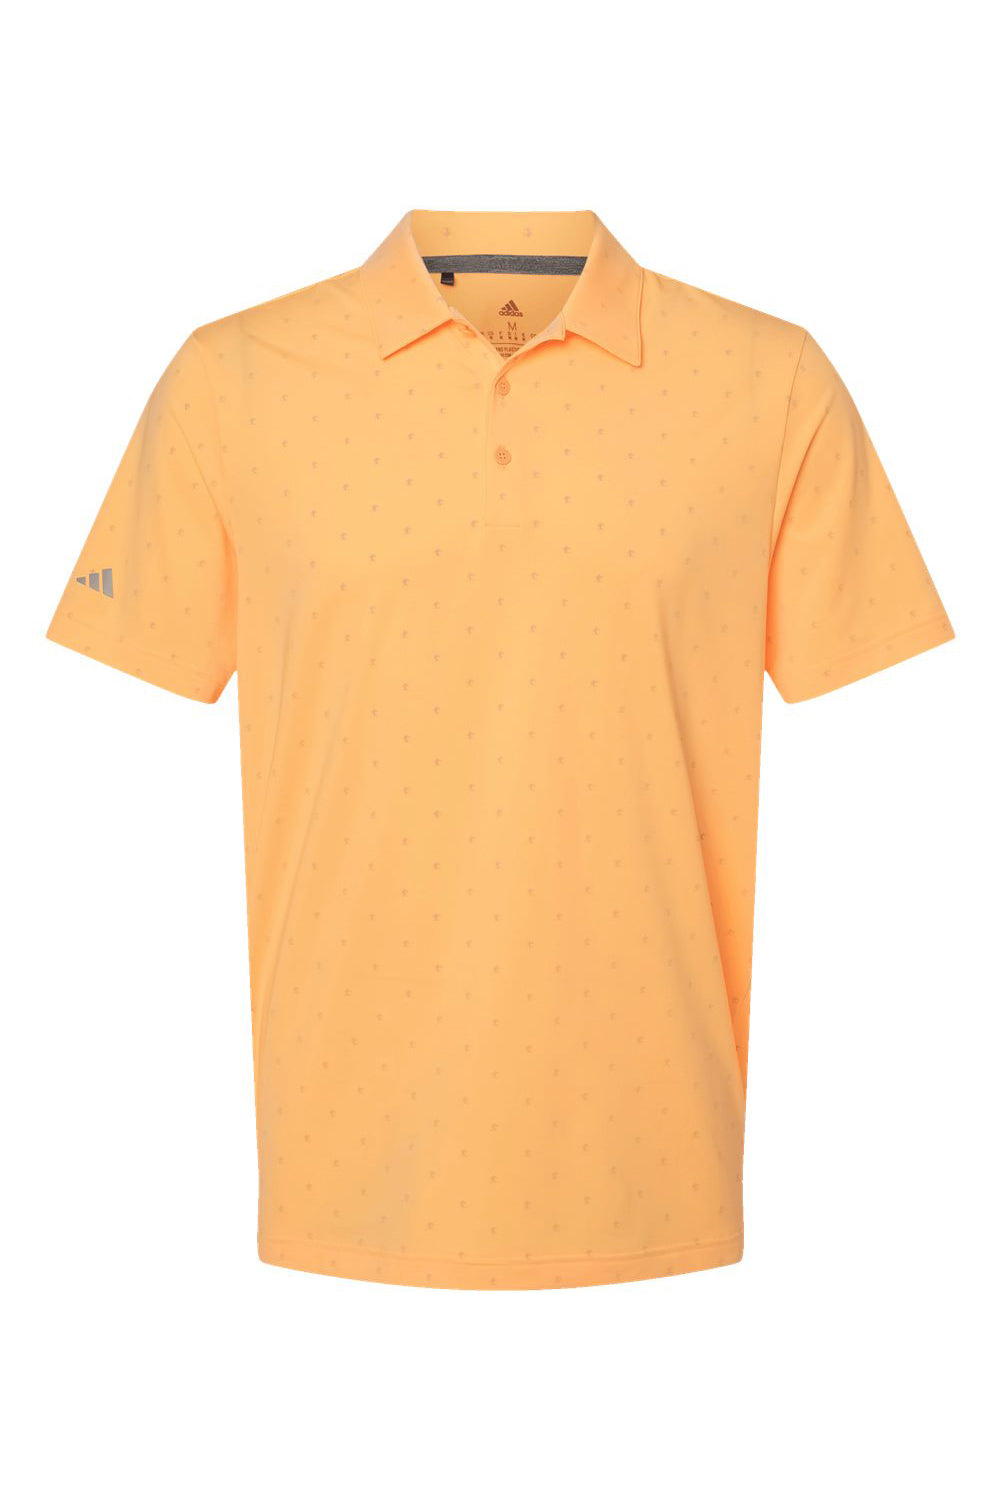 Adidas A574 Mens Pine Tree Short Sleeve Polo Shirt Acid Orange/Grey Flat Front